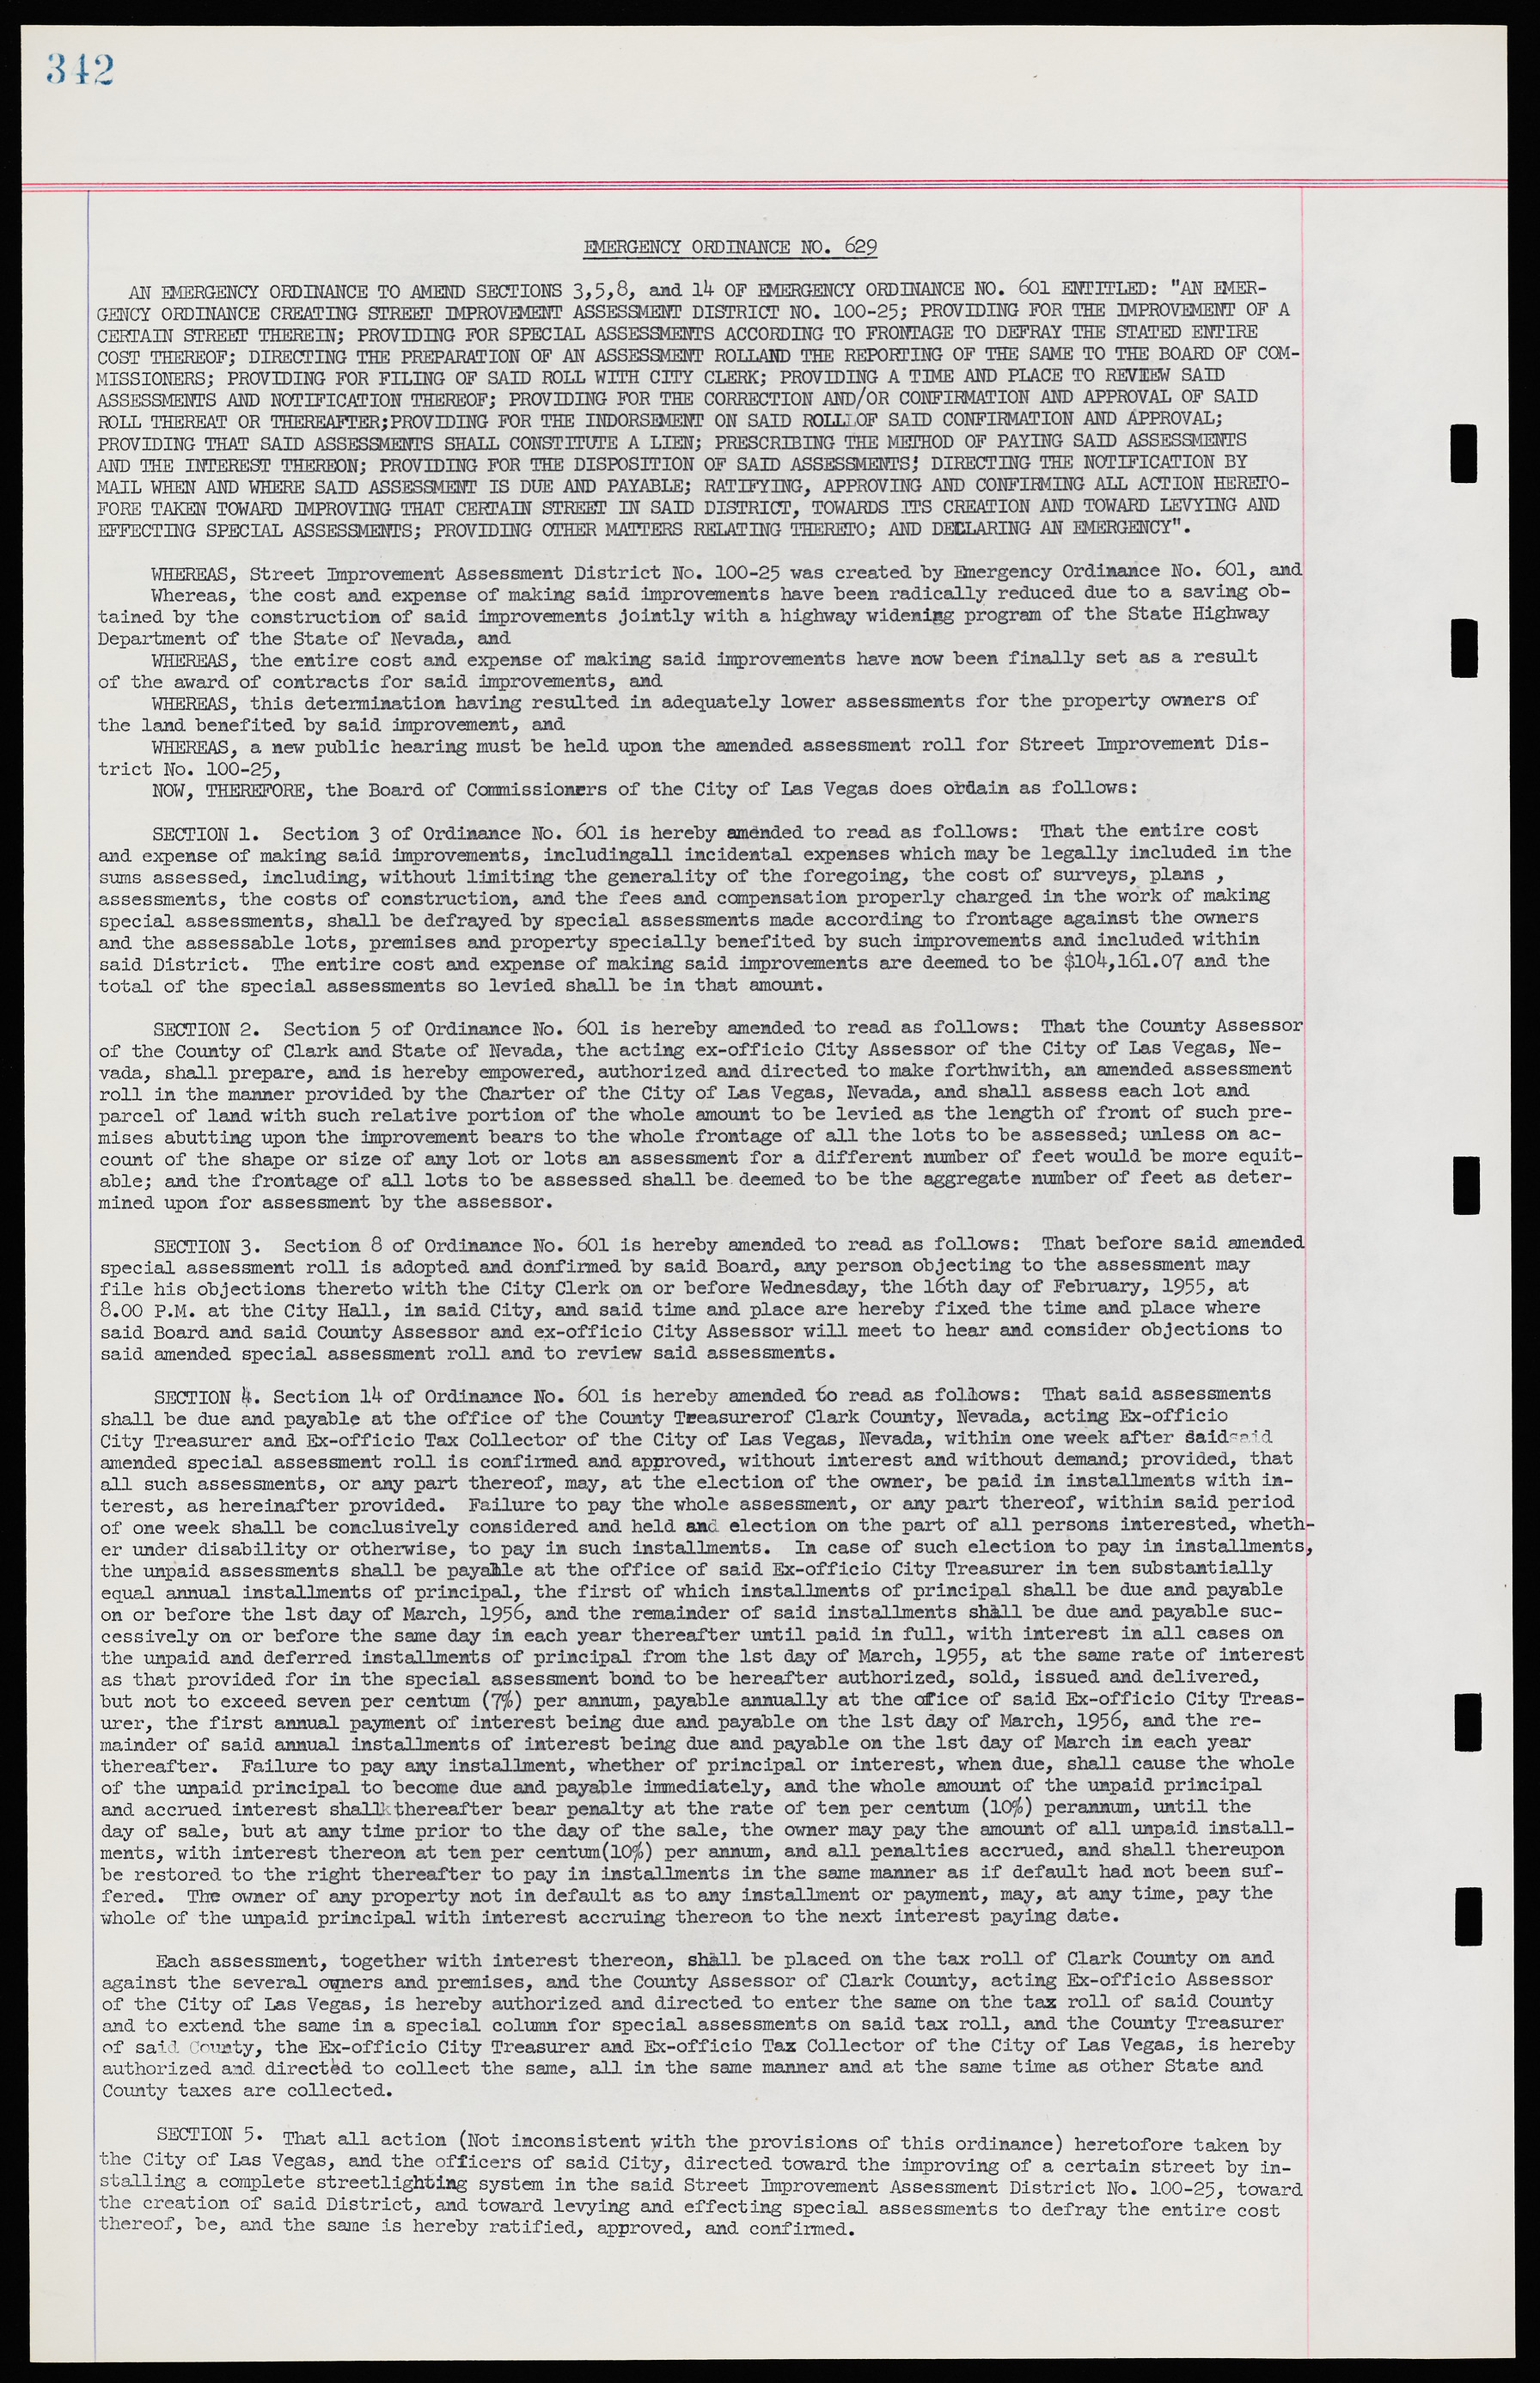 Las Vegas City Ordinances, November 13, 1950 to August 6, 1958, lvc000015-350